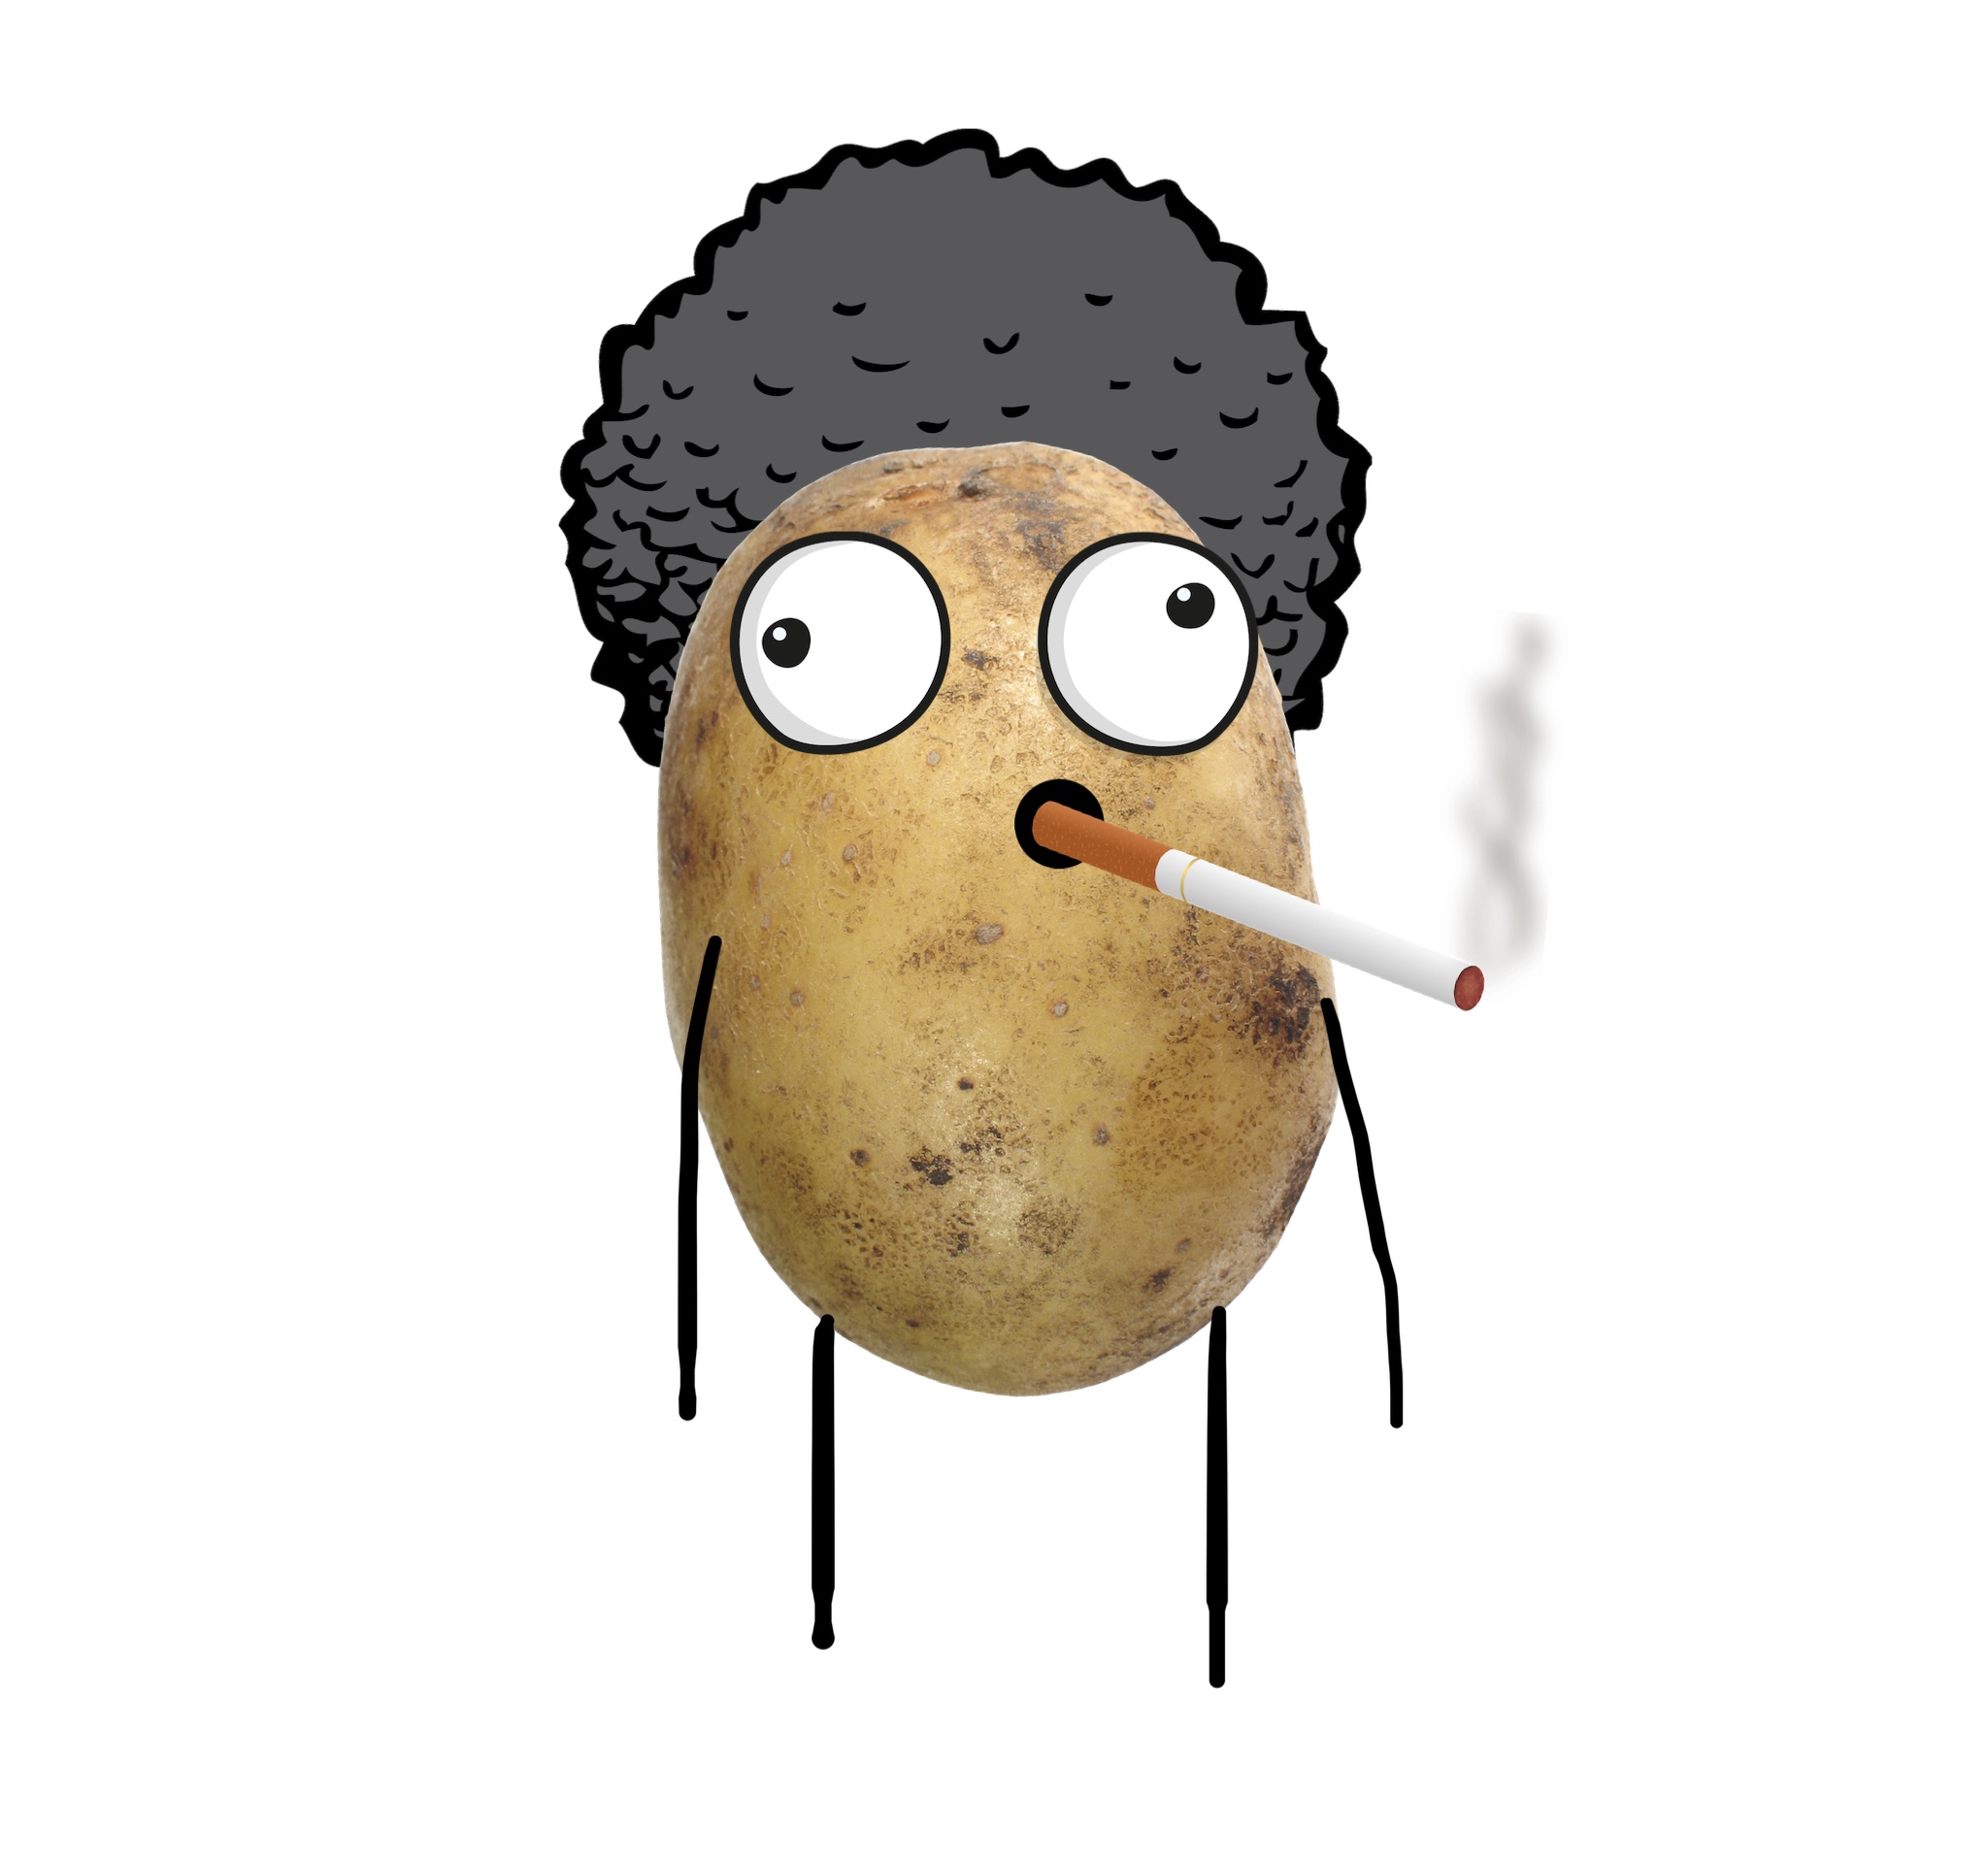 Smoking potatoman